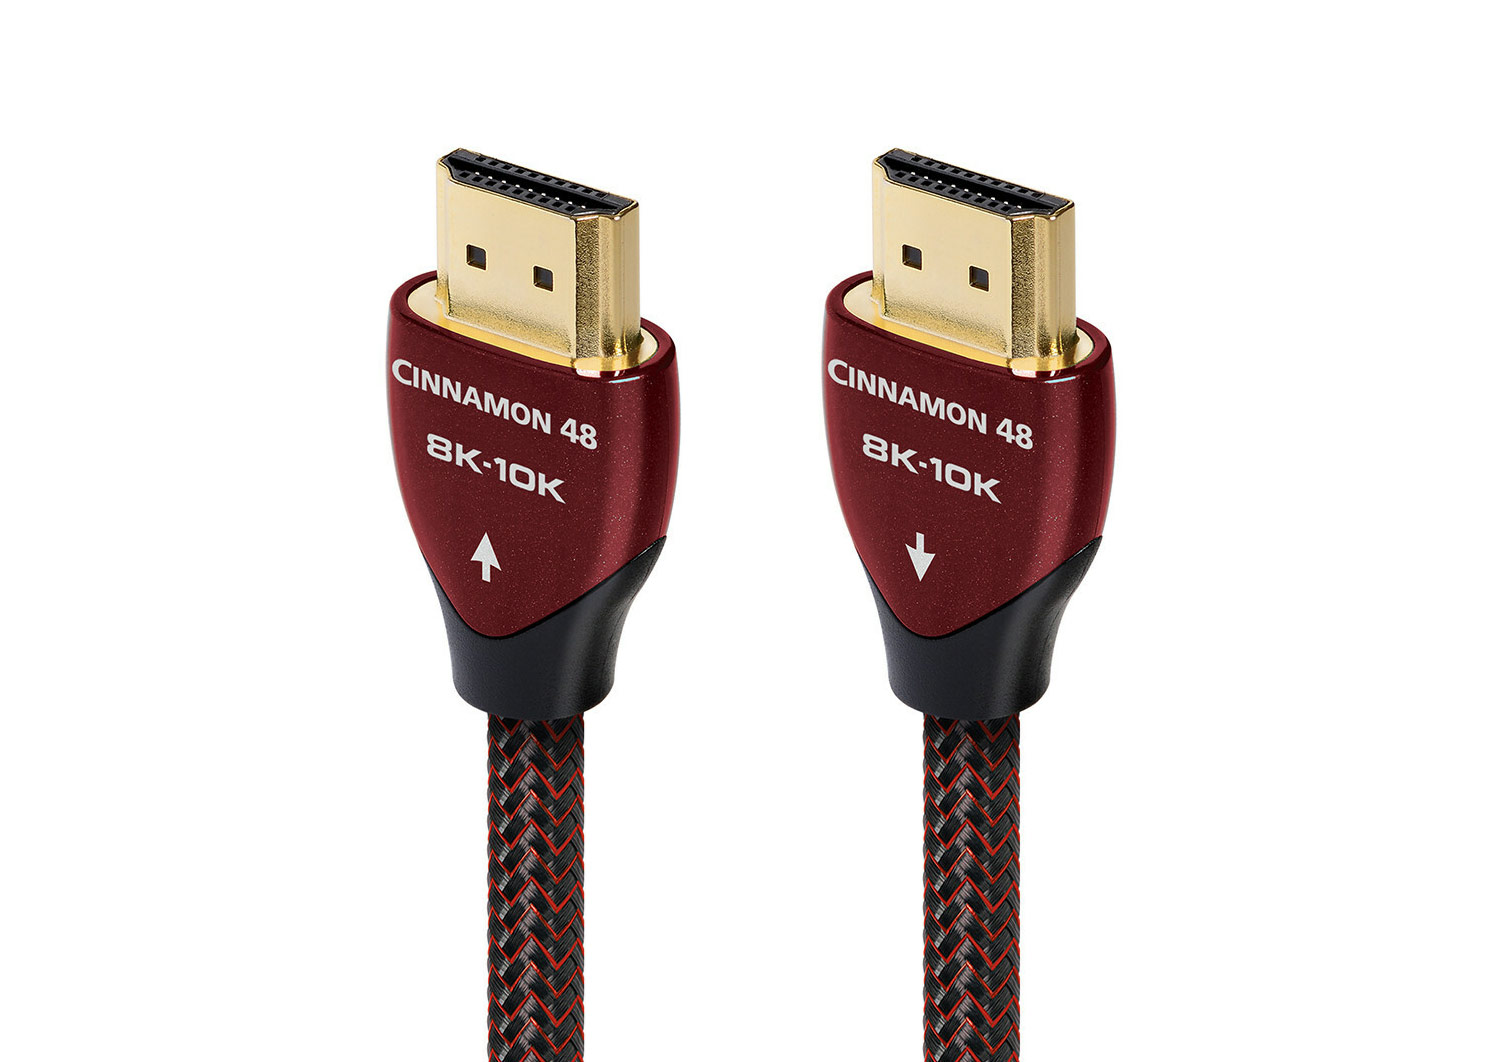 HDMI-Cinnamon 48 Version 2.1 (3.0M)